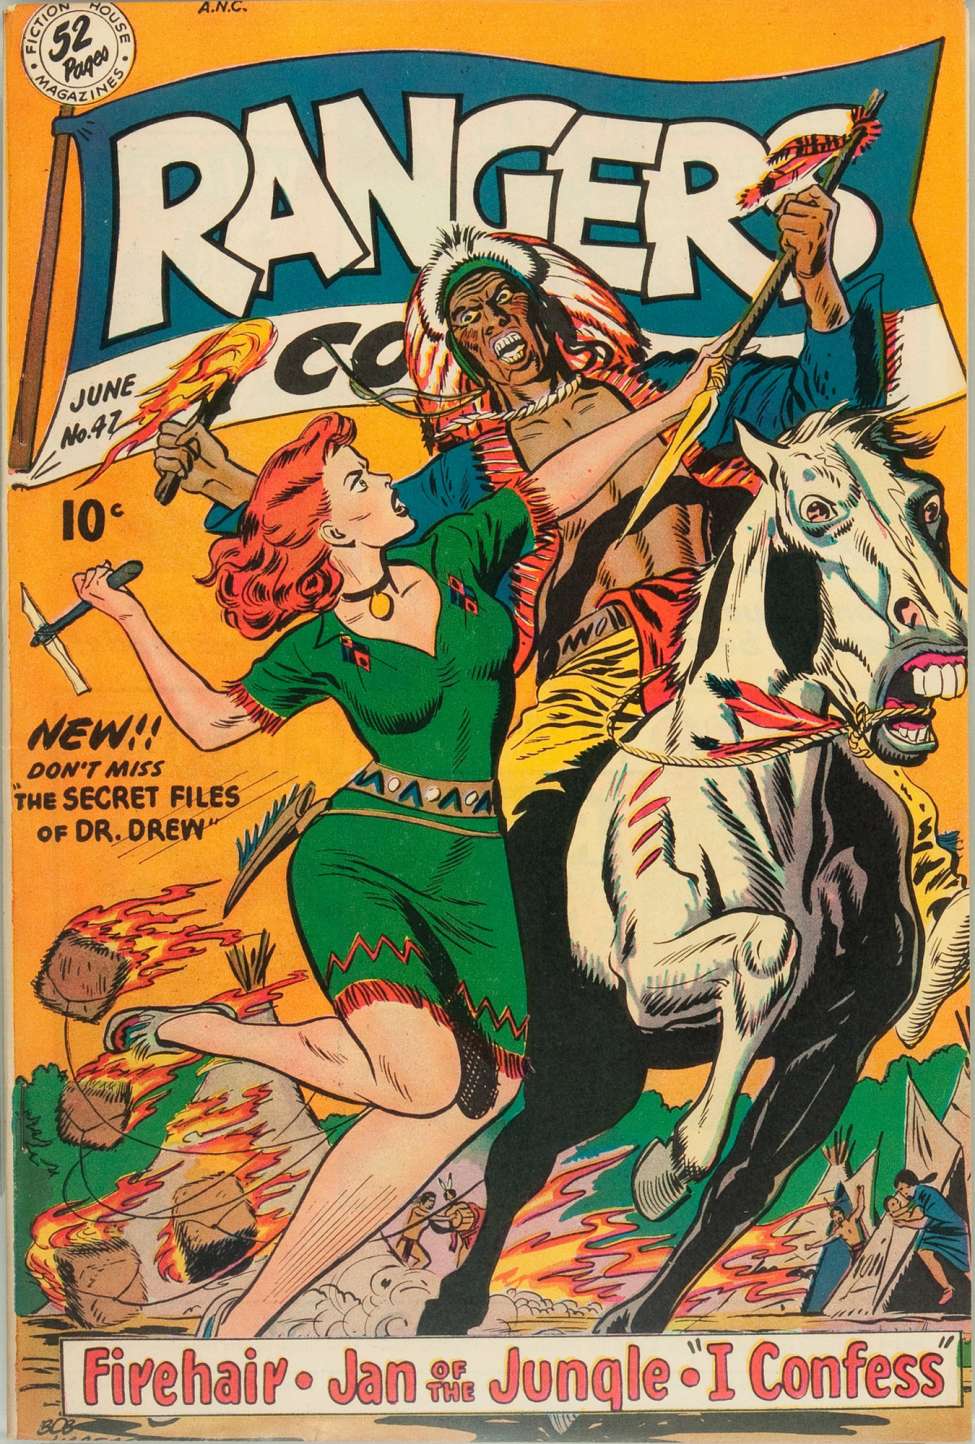 Book Cover For Rangers Comics 47 (alt) - Version 2